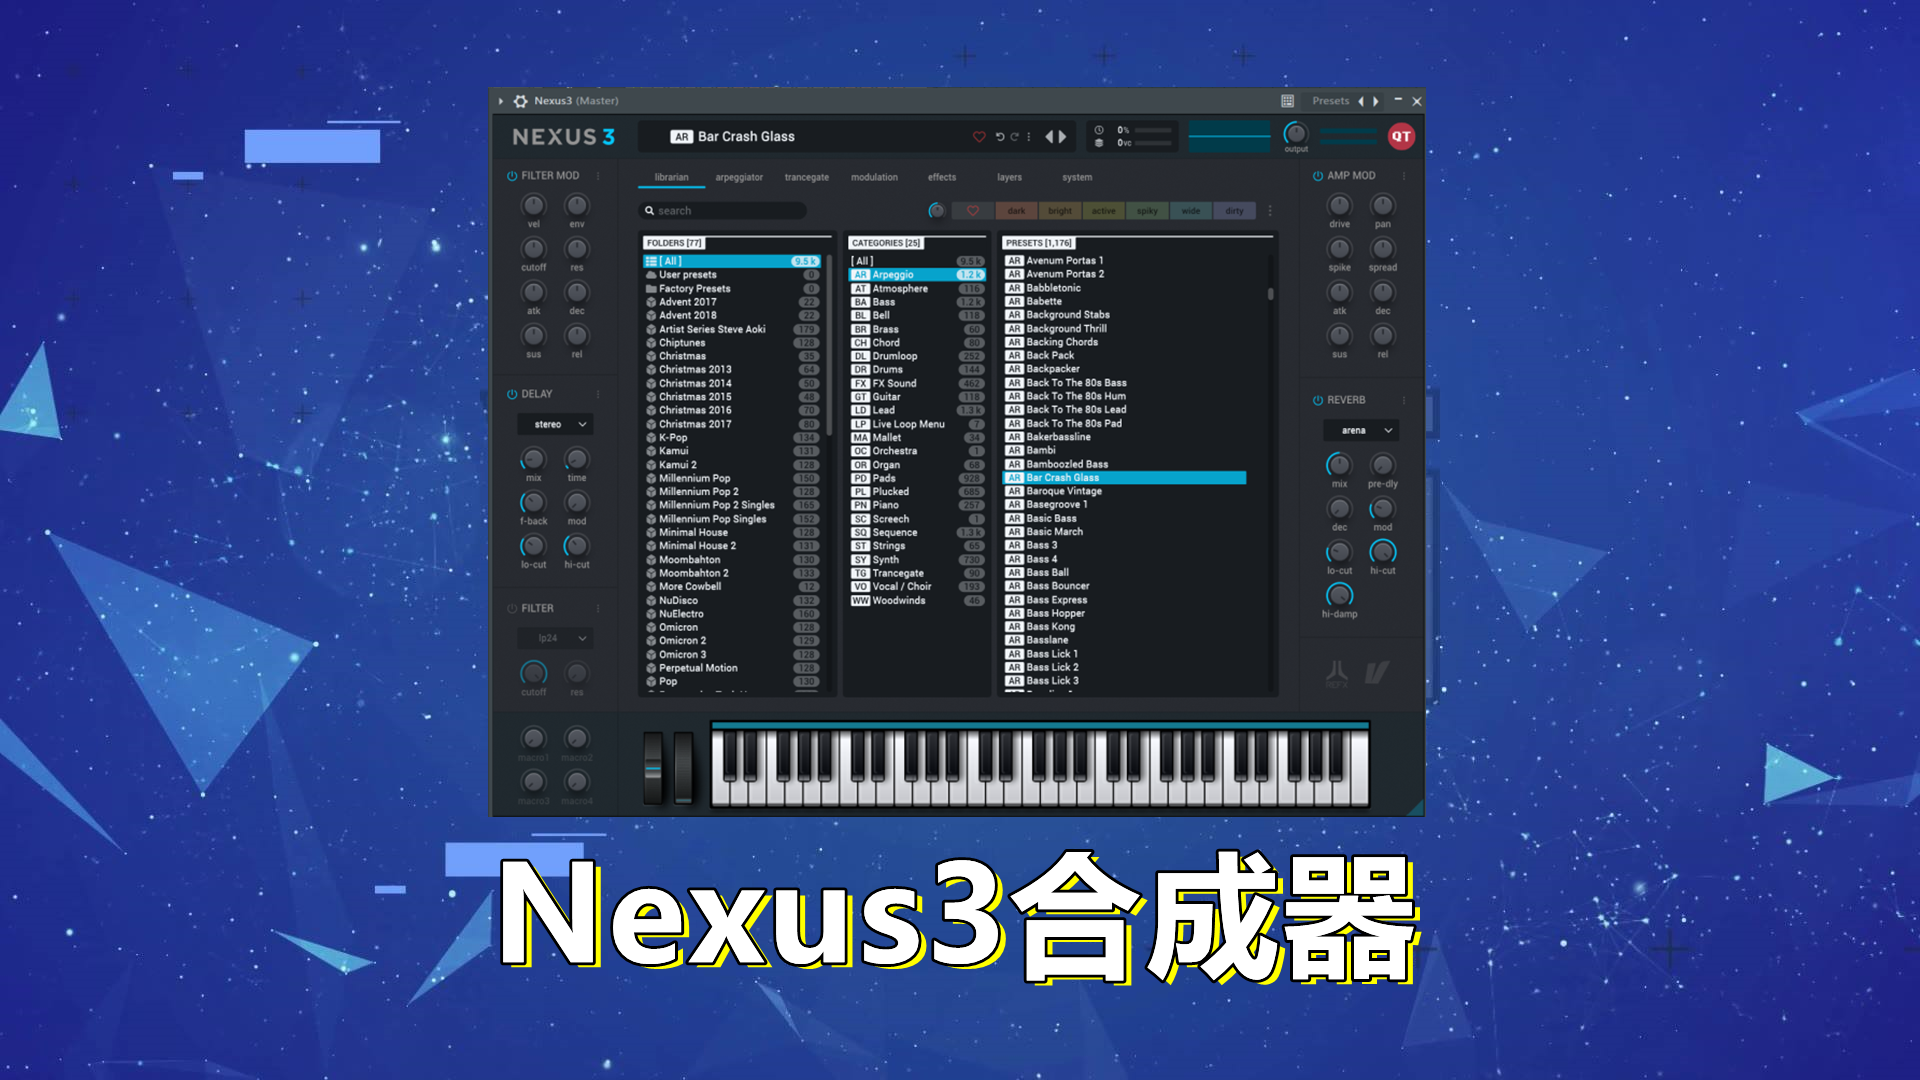 Nexus3合成器完整音色库版 (音乐制作人必备合成器) 音色超多! Nexus3合成器 Win\Mac主程序+Nexus3合成器音色库